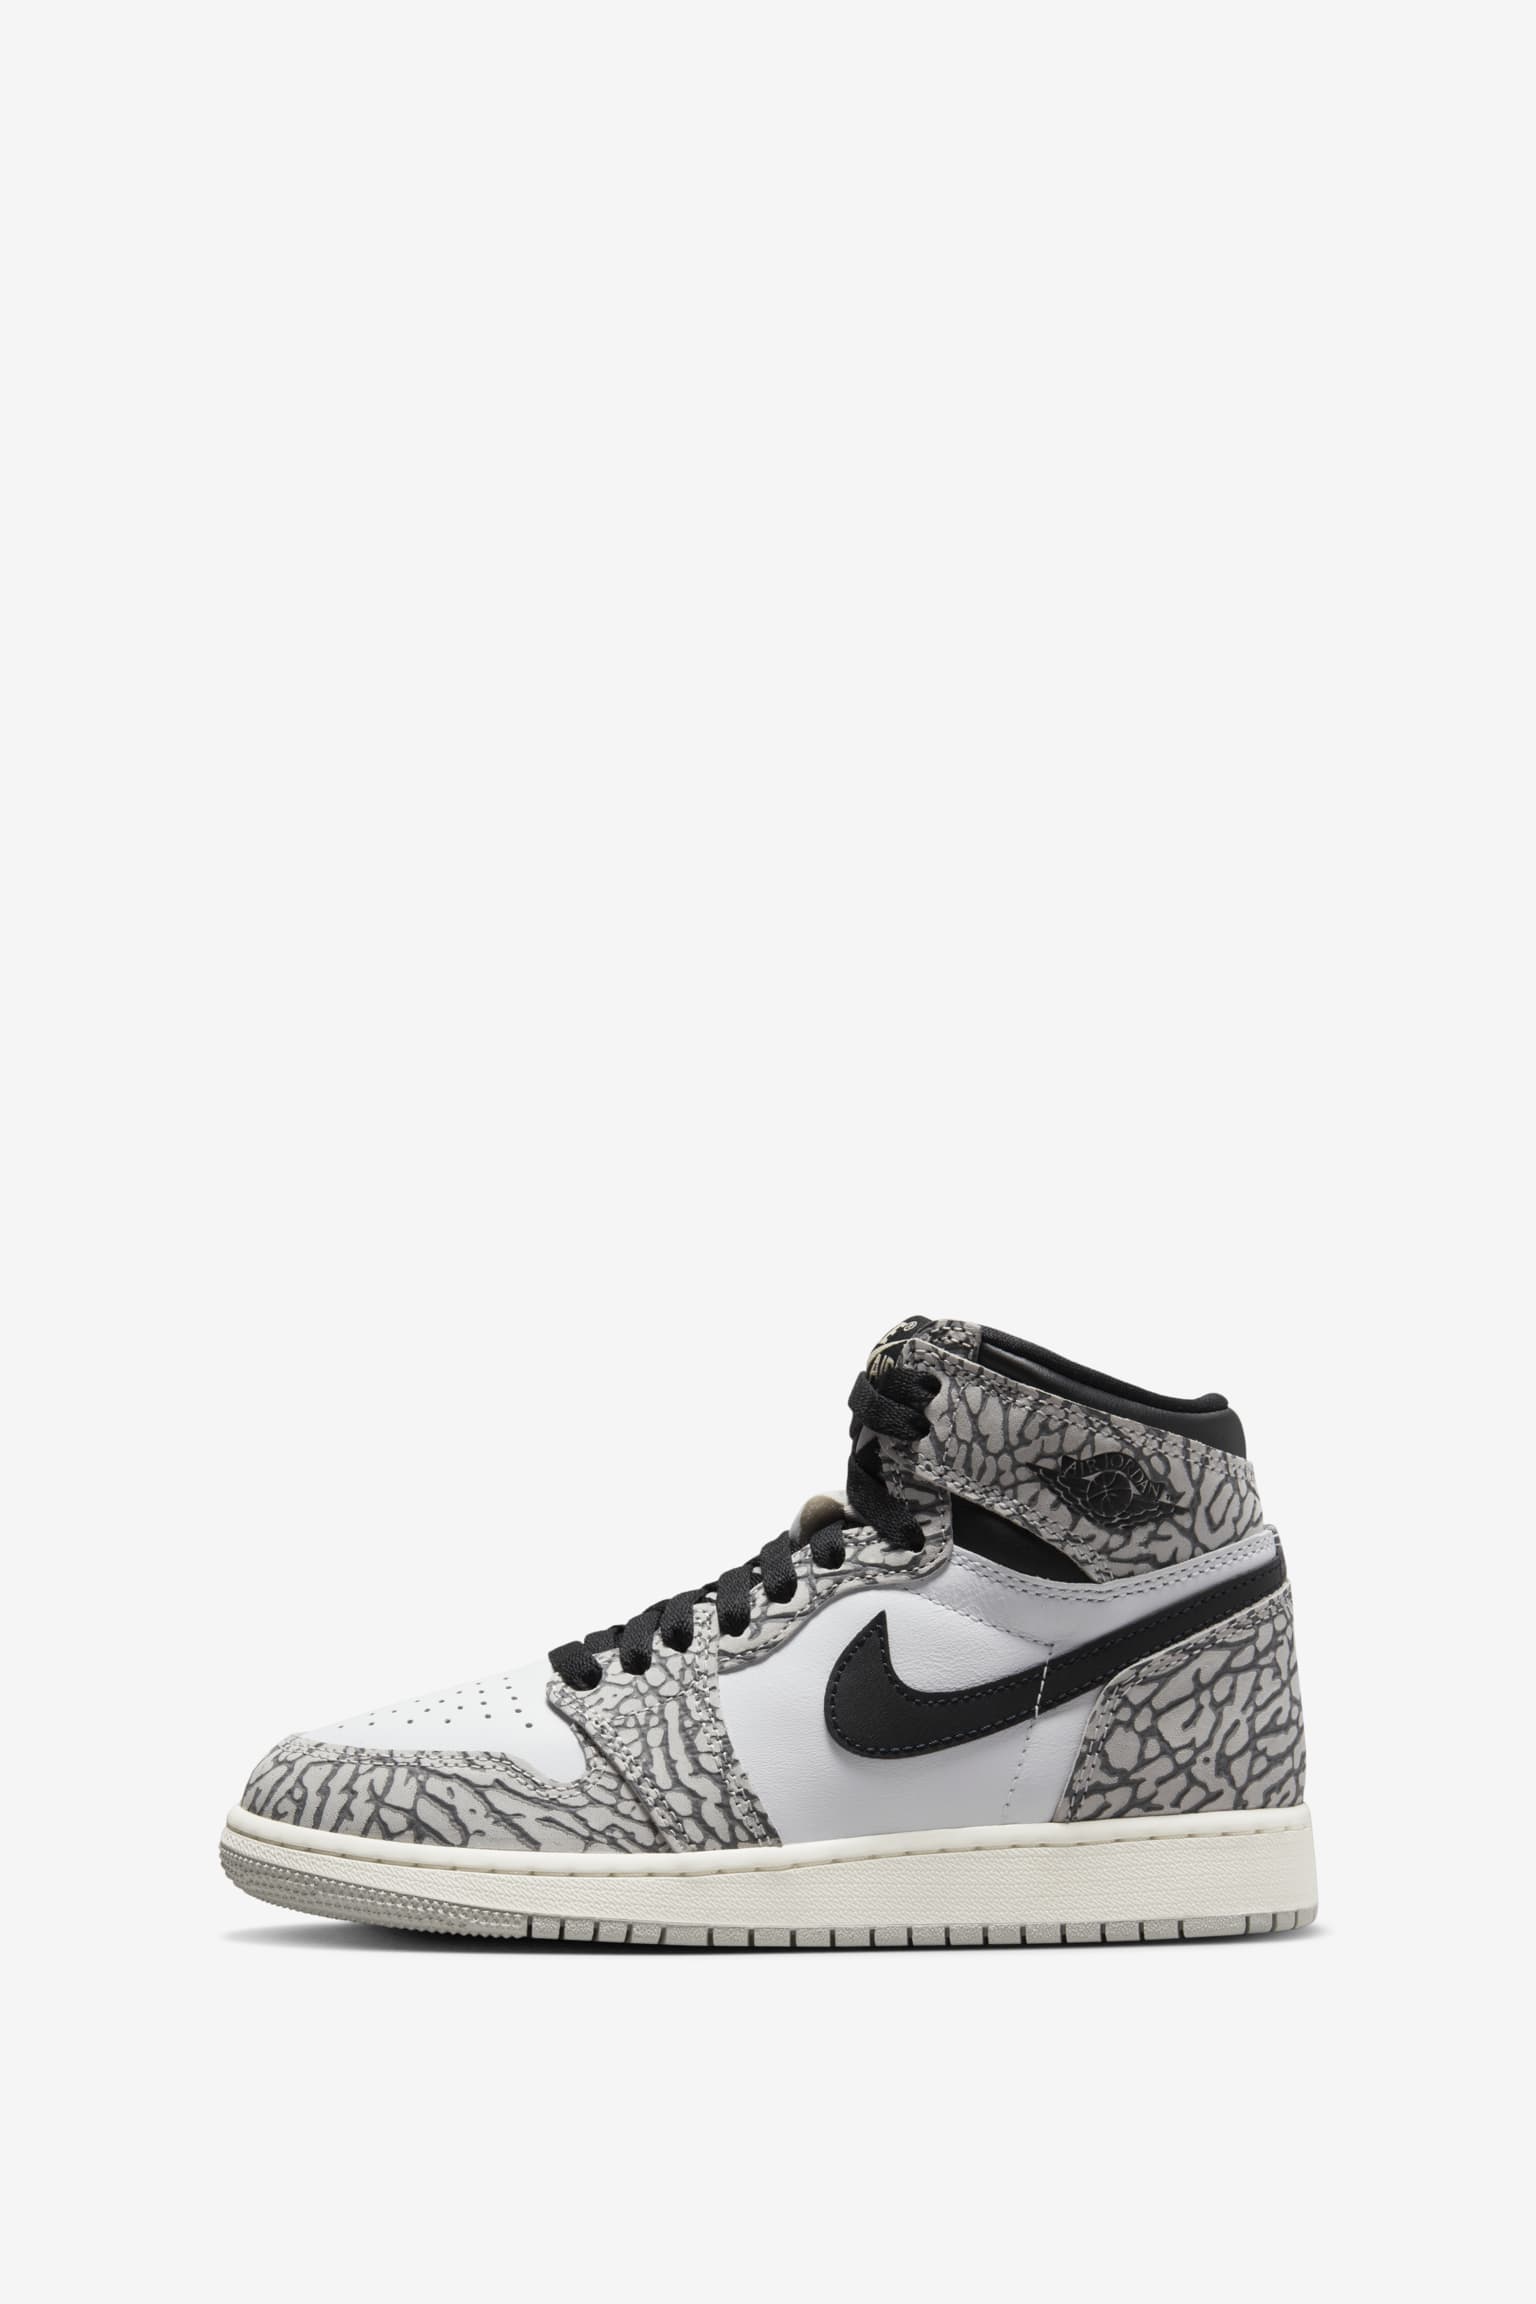 Air Jordan 1 'White Cement' (DZ5485-052) Release Date. Nike SNKRS PH